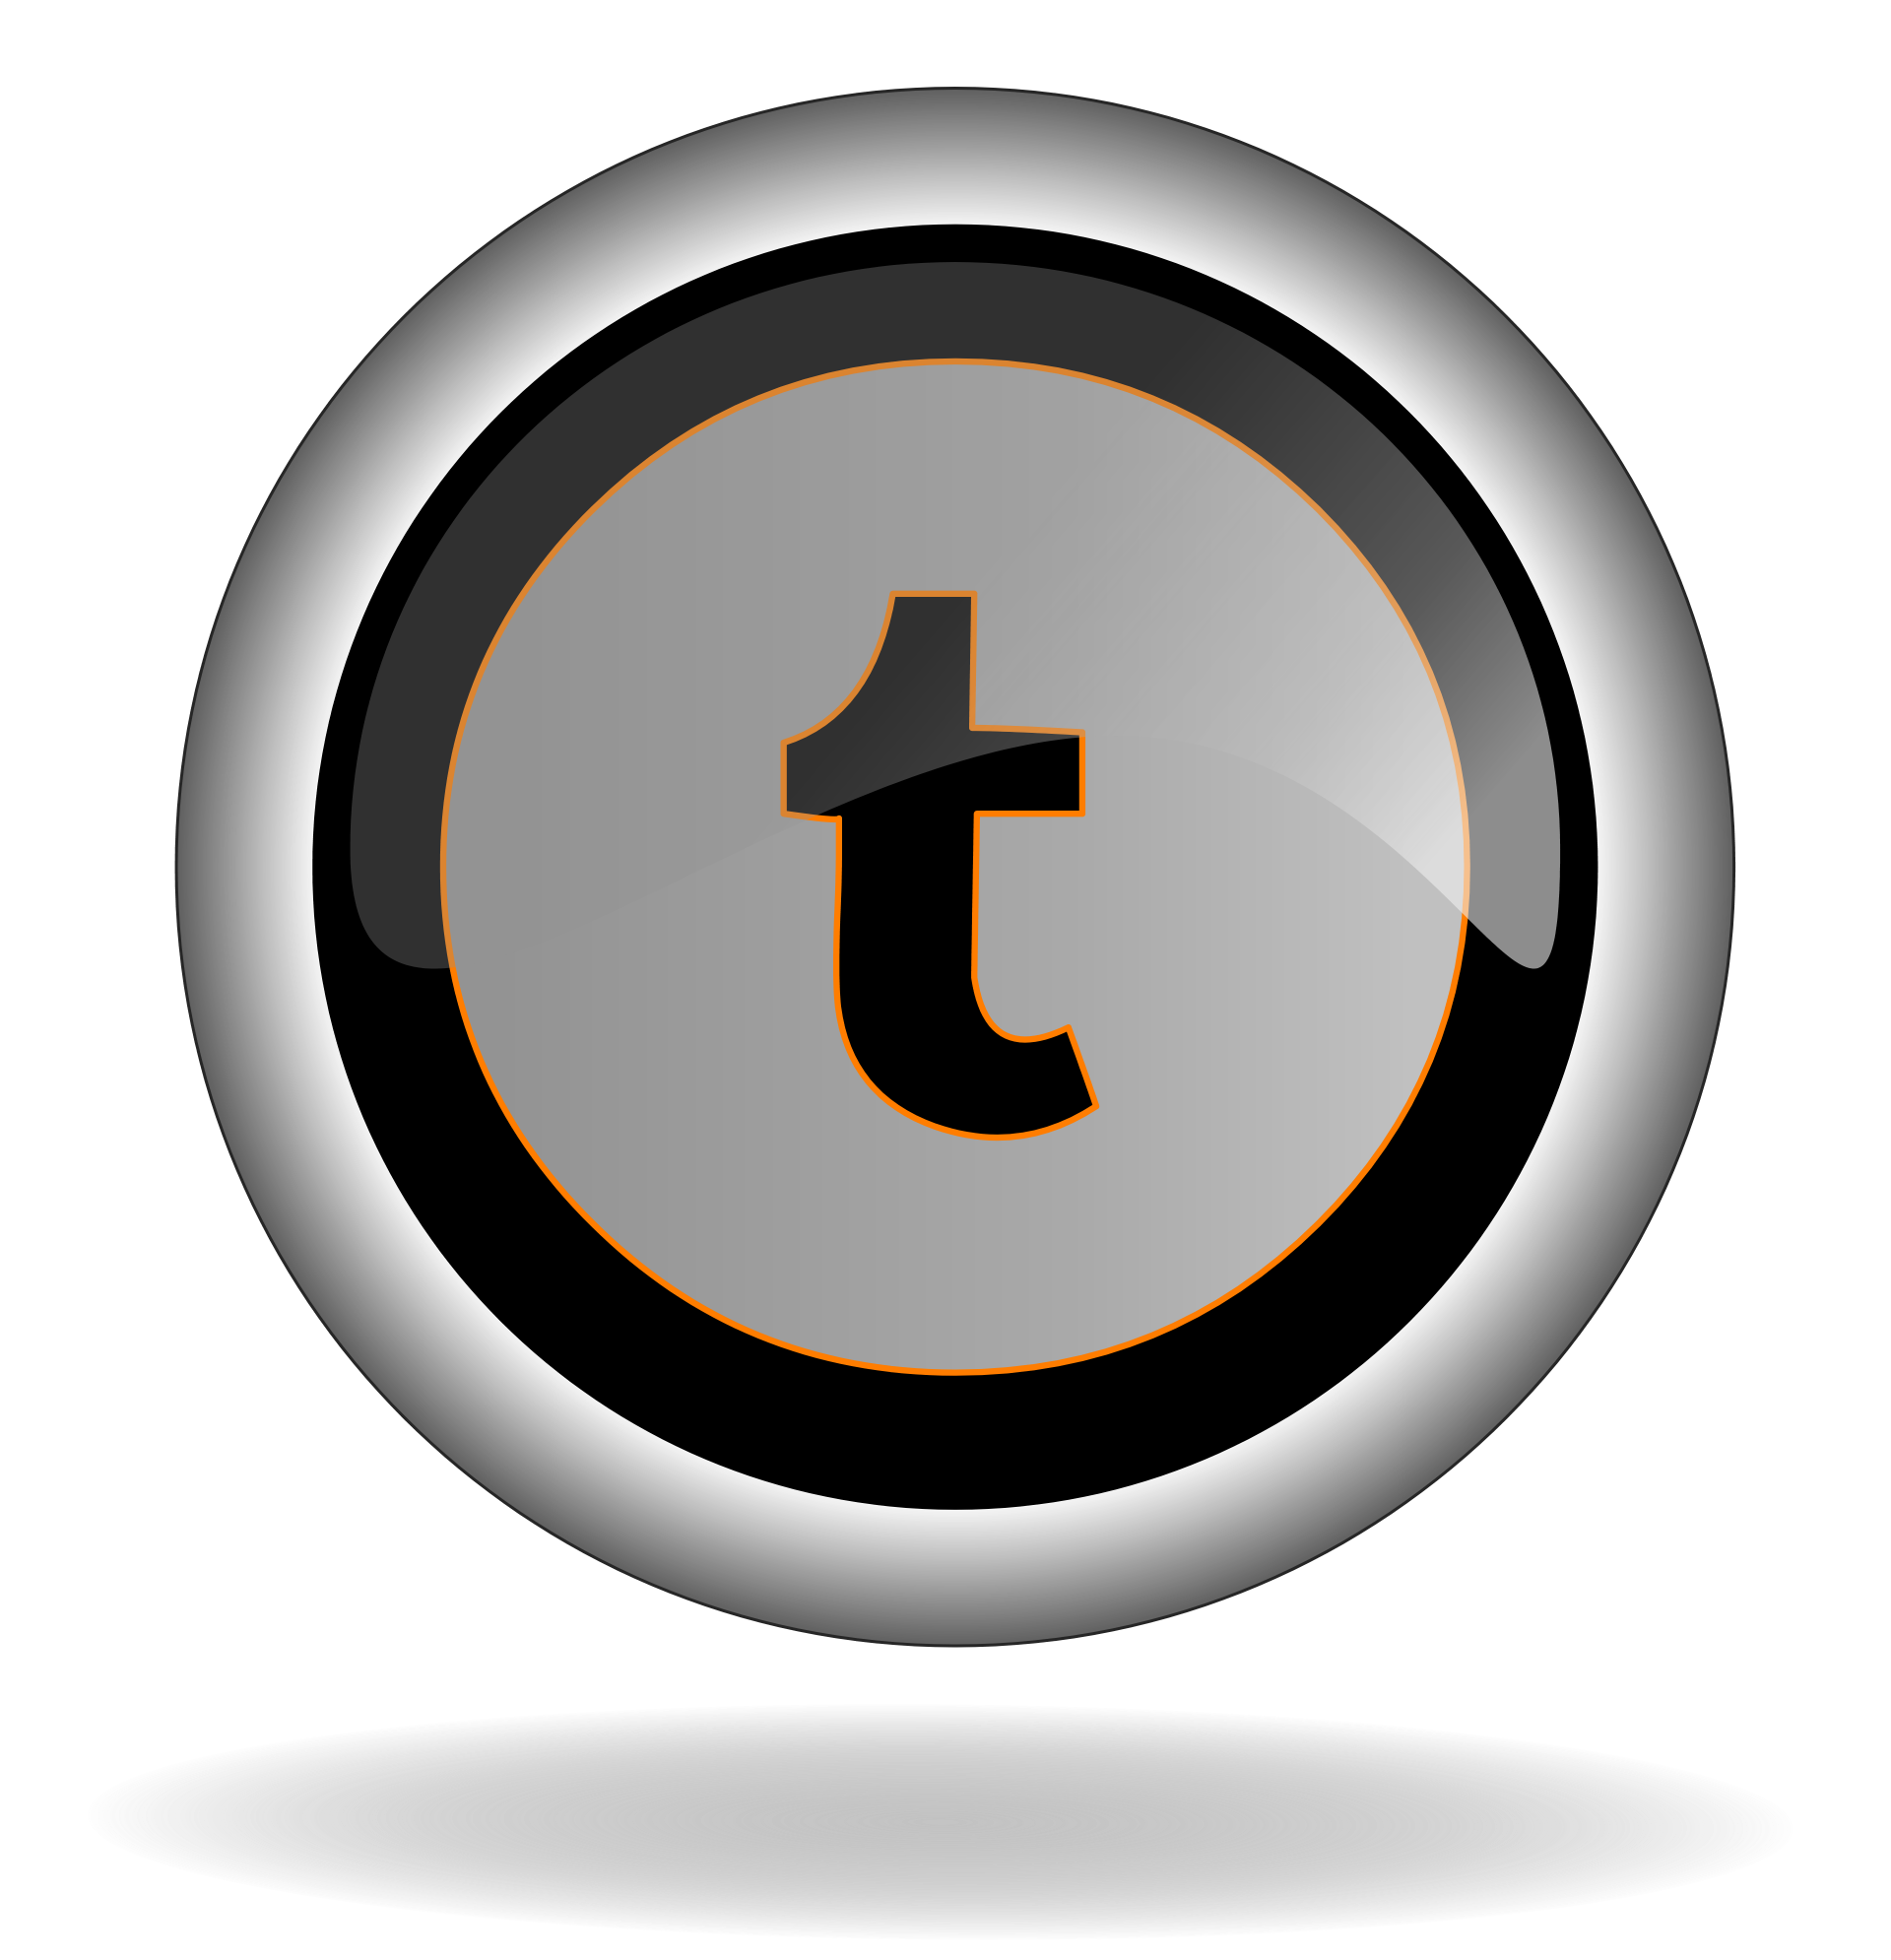 Icona del logo Tumblr PNG